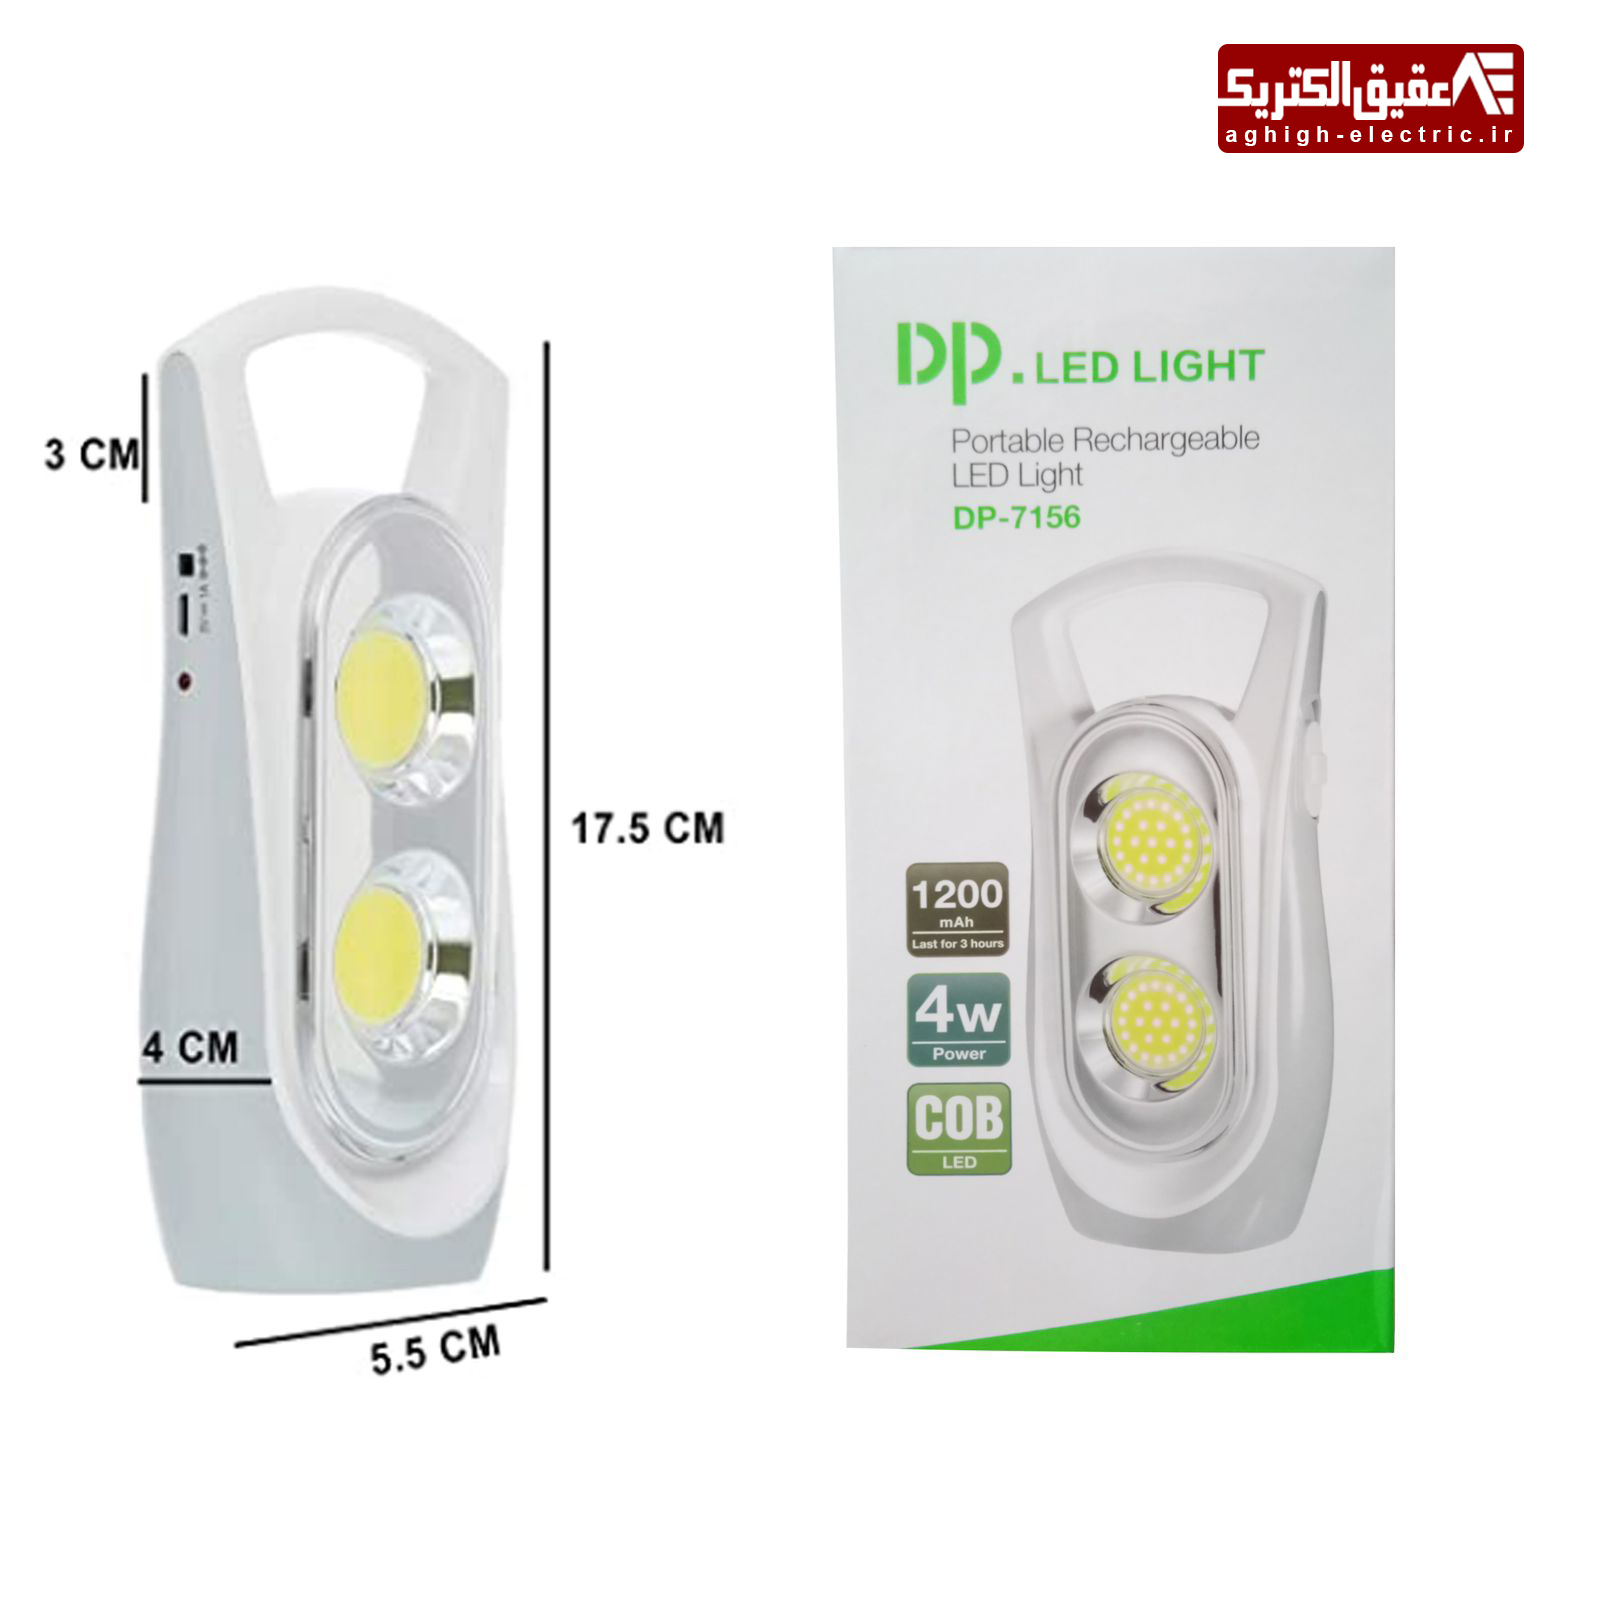 چراغ اضطراری دی پی مدل DP7156 ( عقیق الکتریک ) چراغ اضطراری شارژی DP.LED LIGHT DP-7156